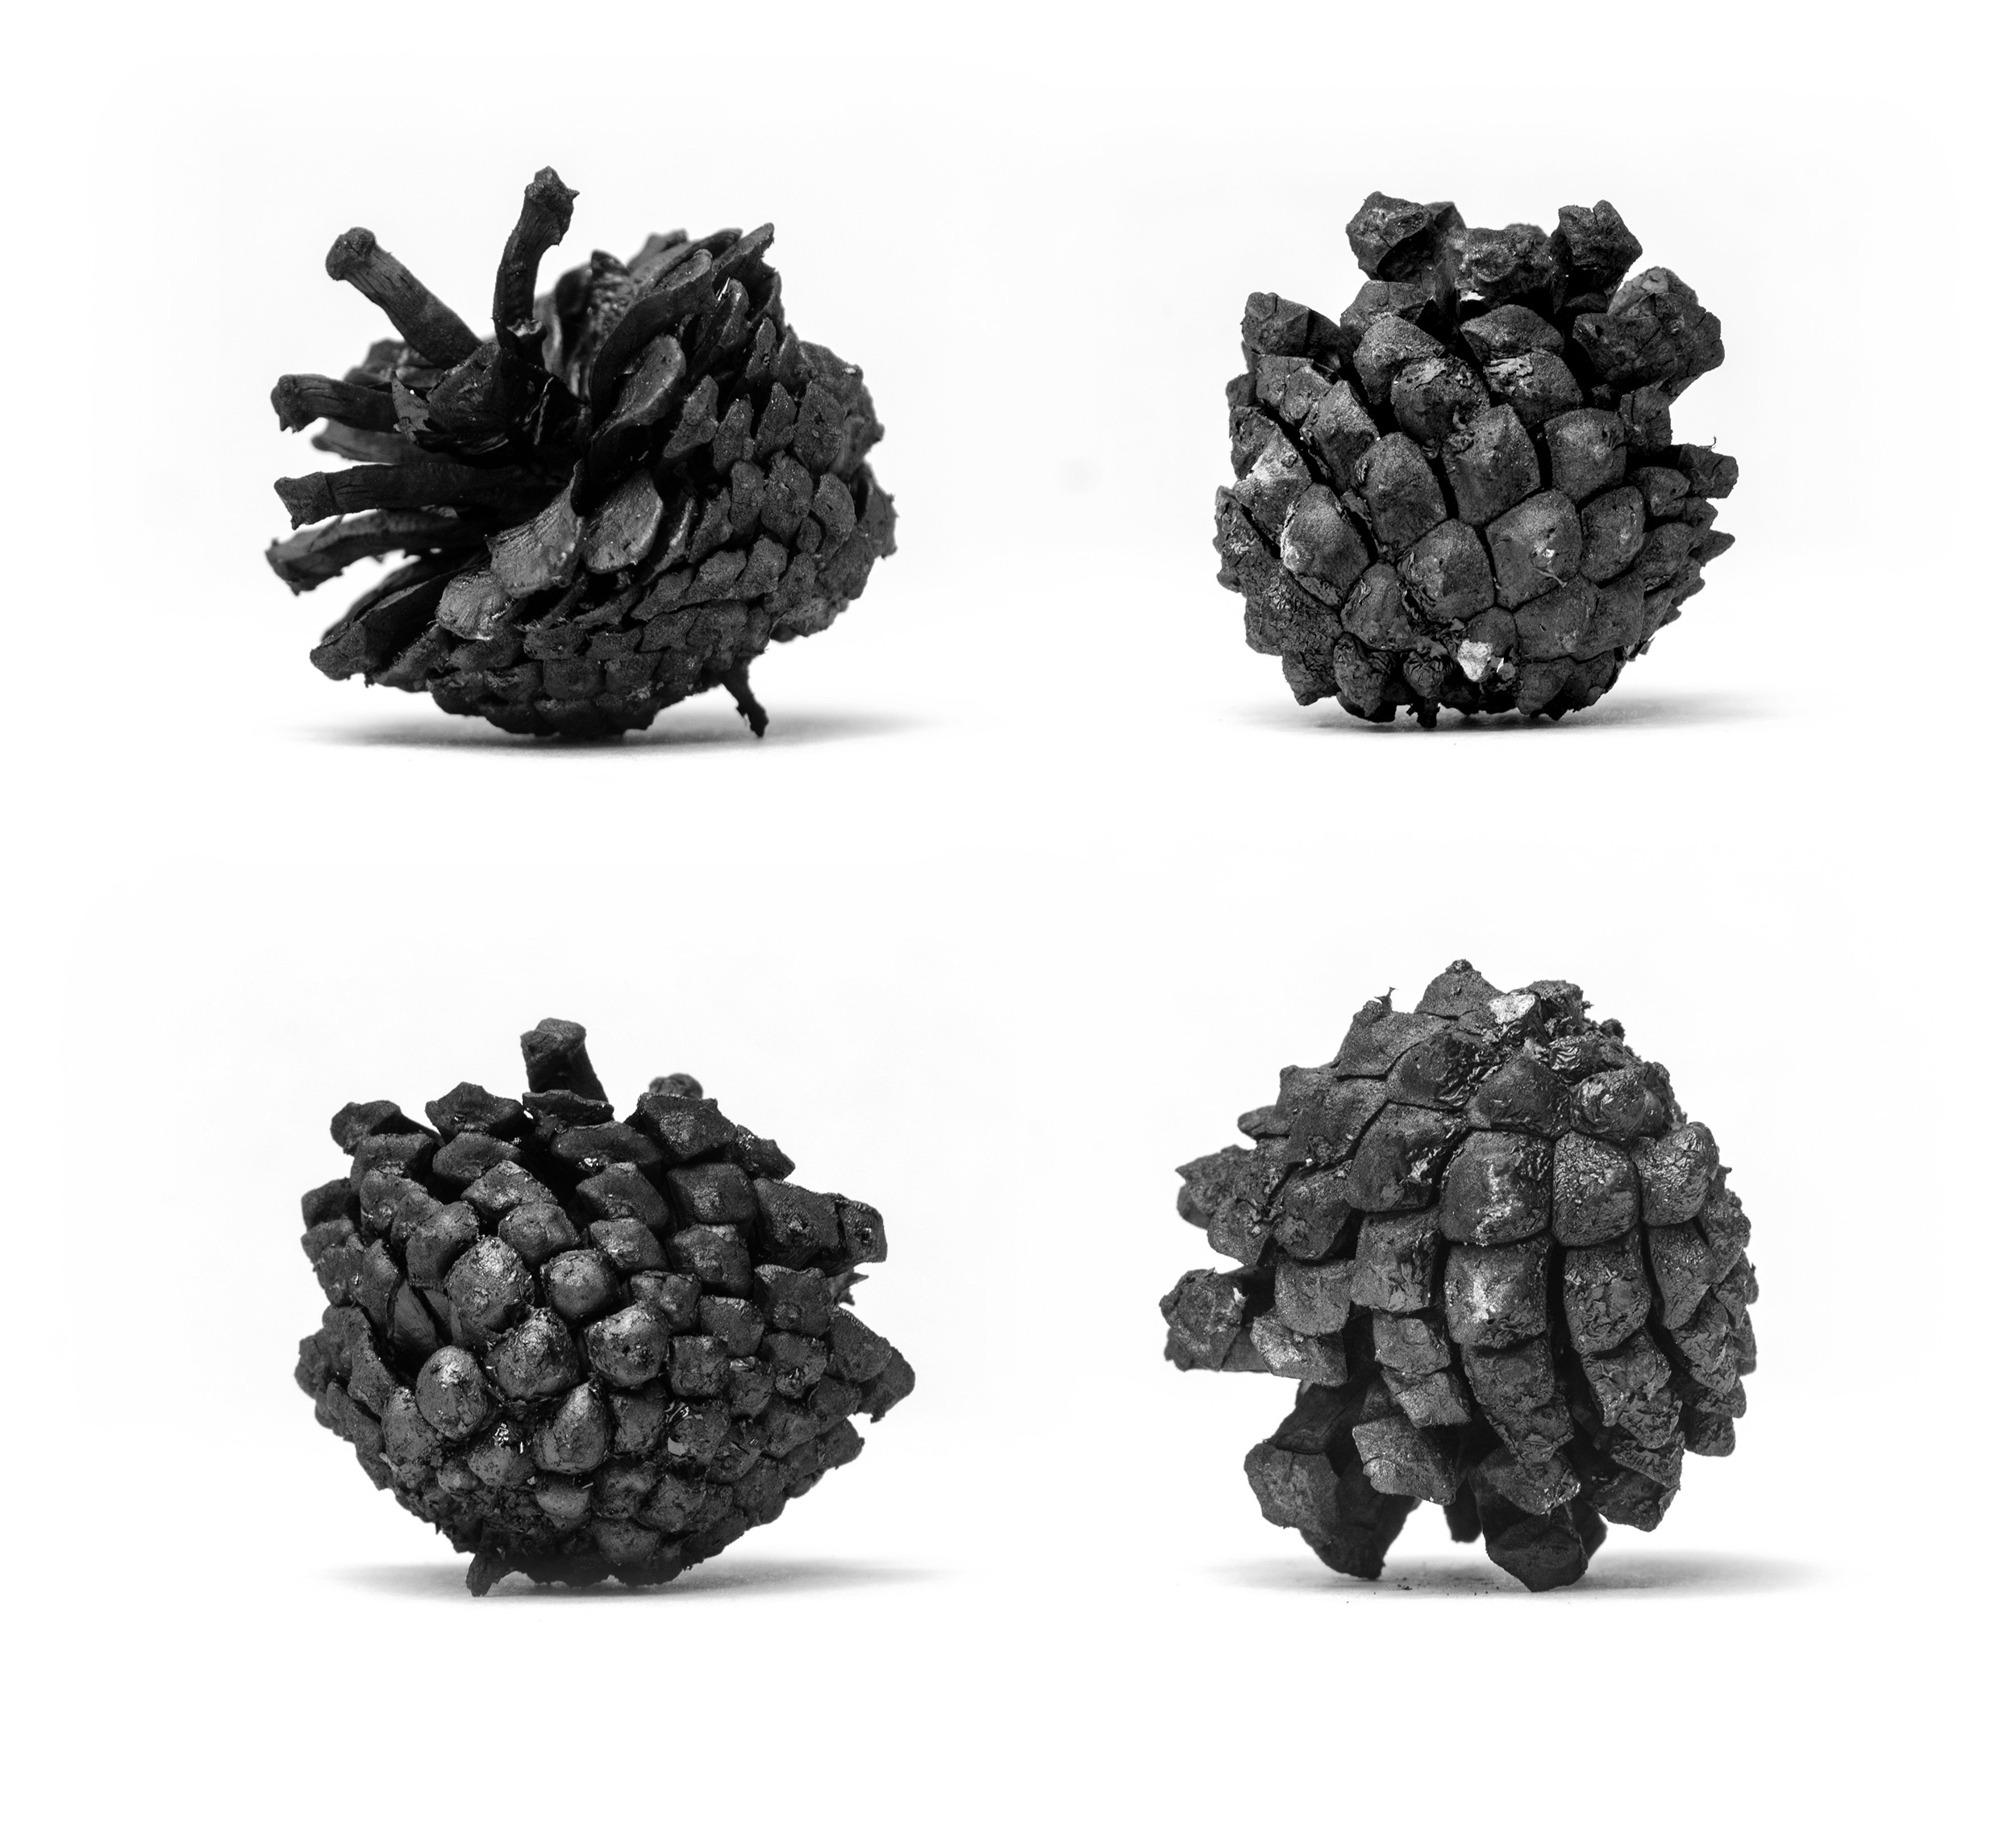 Guillermo Mena's artwork titled Four Pine Cones